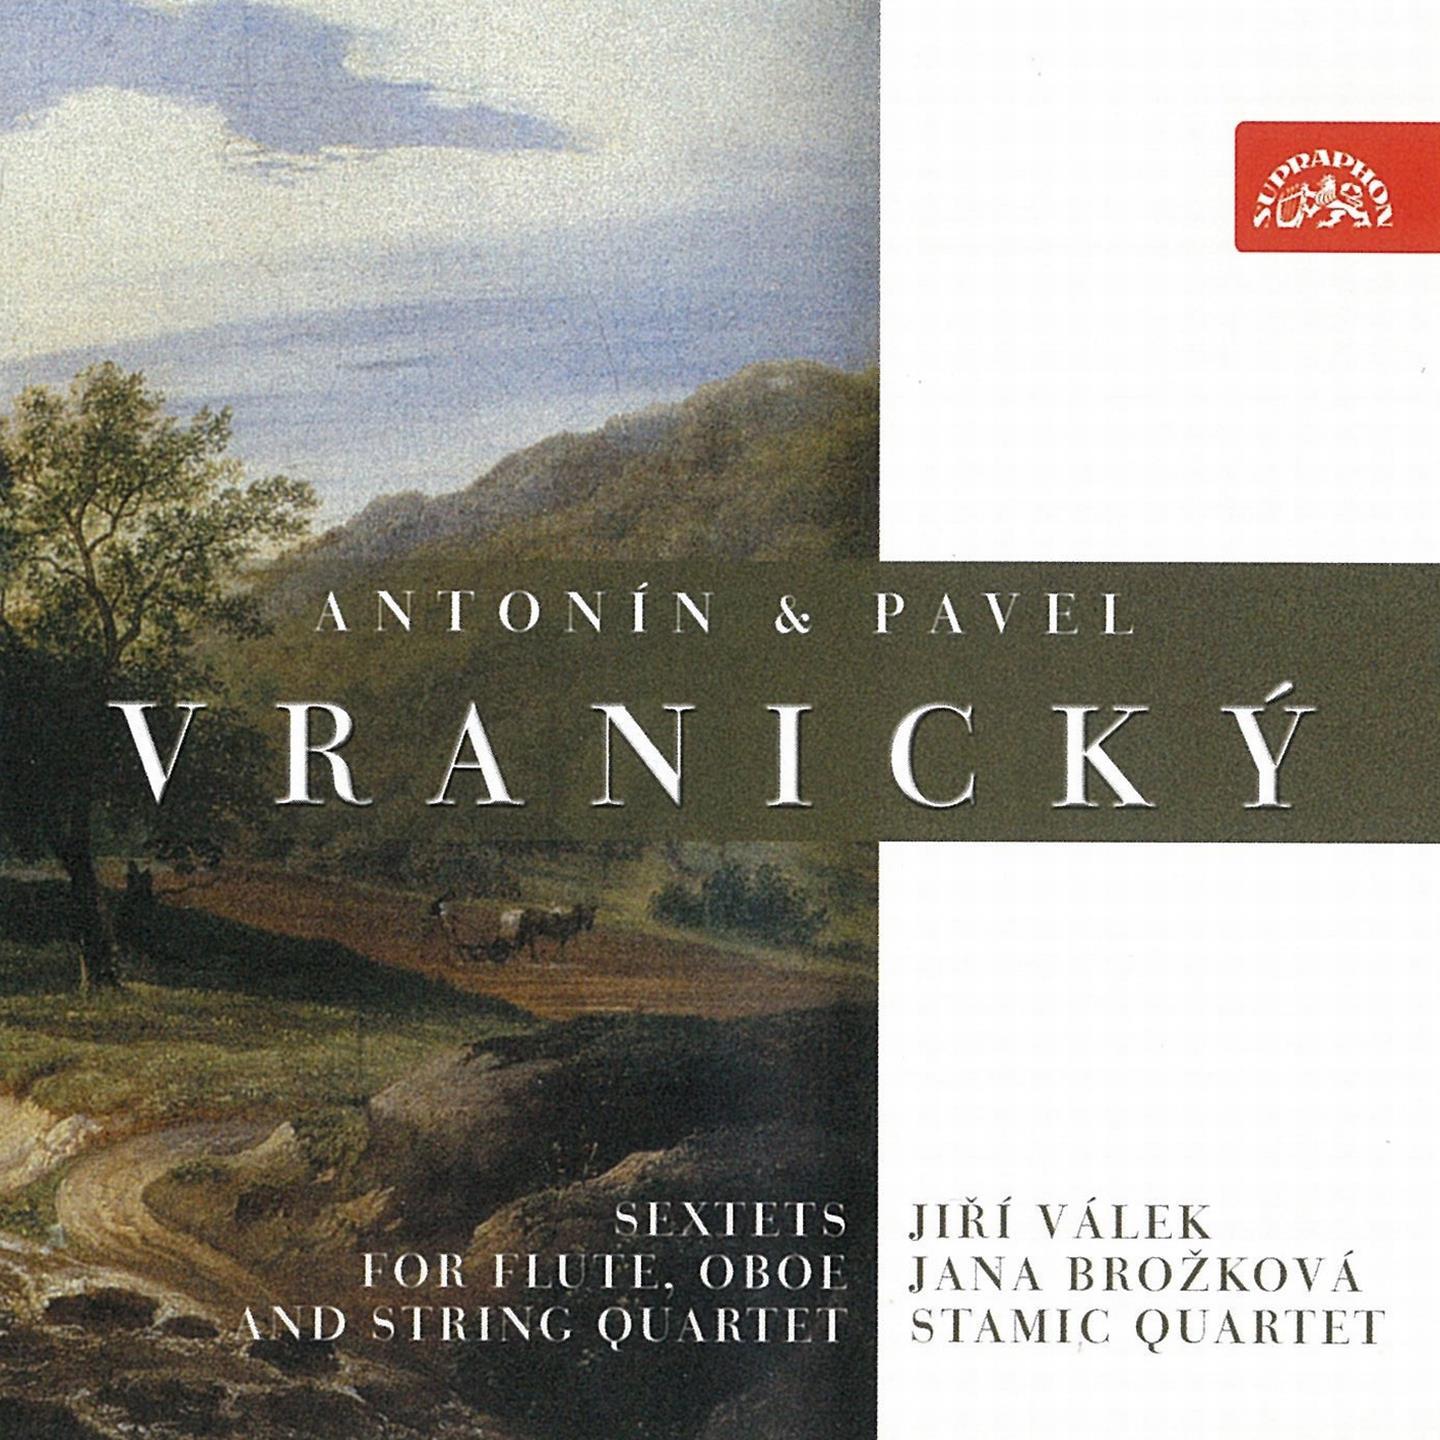 Antoni n  Pavel Vranick: Sextets for Flute, Oboe and String Quartet